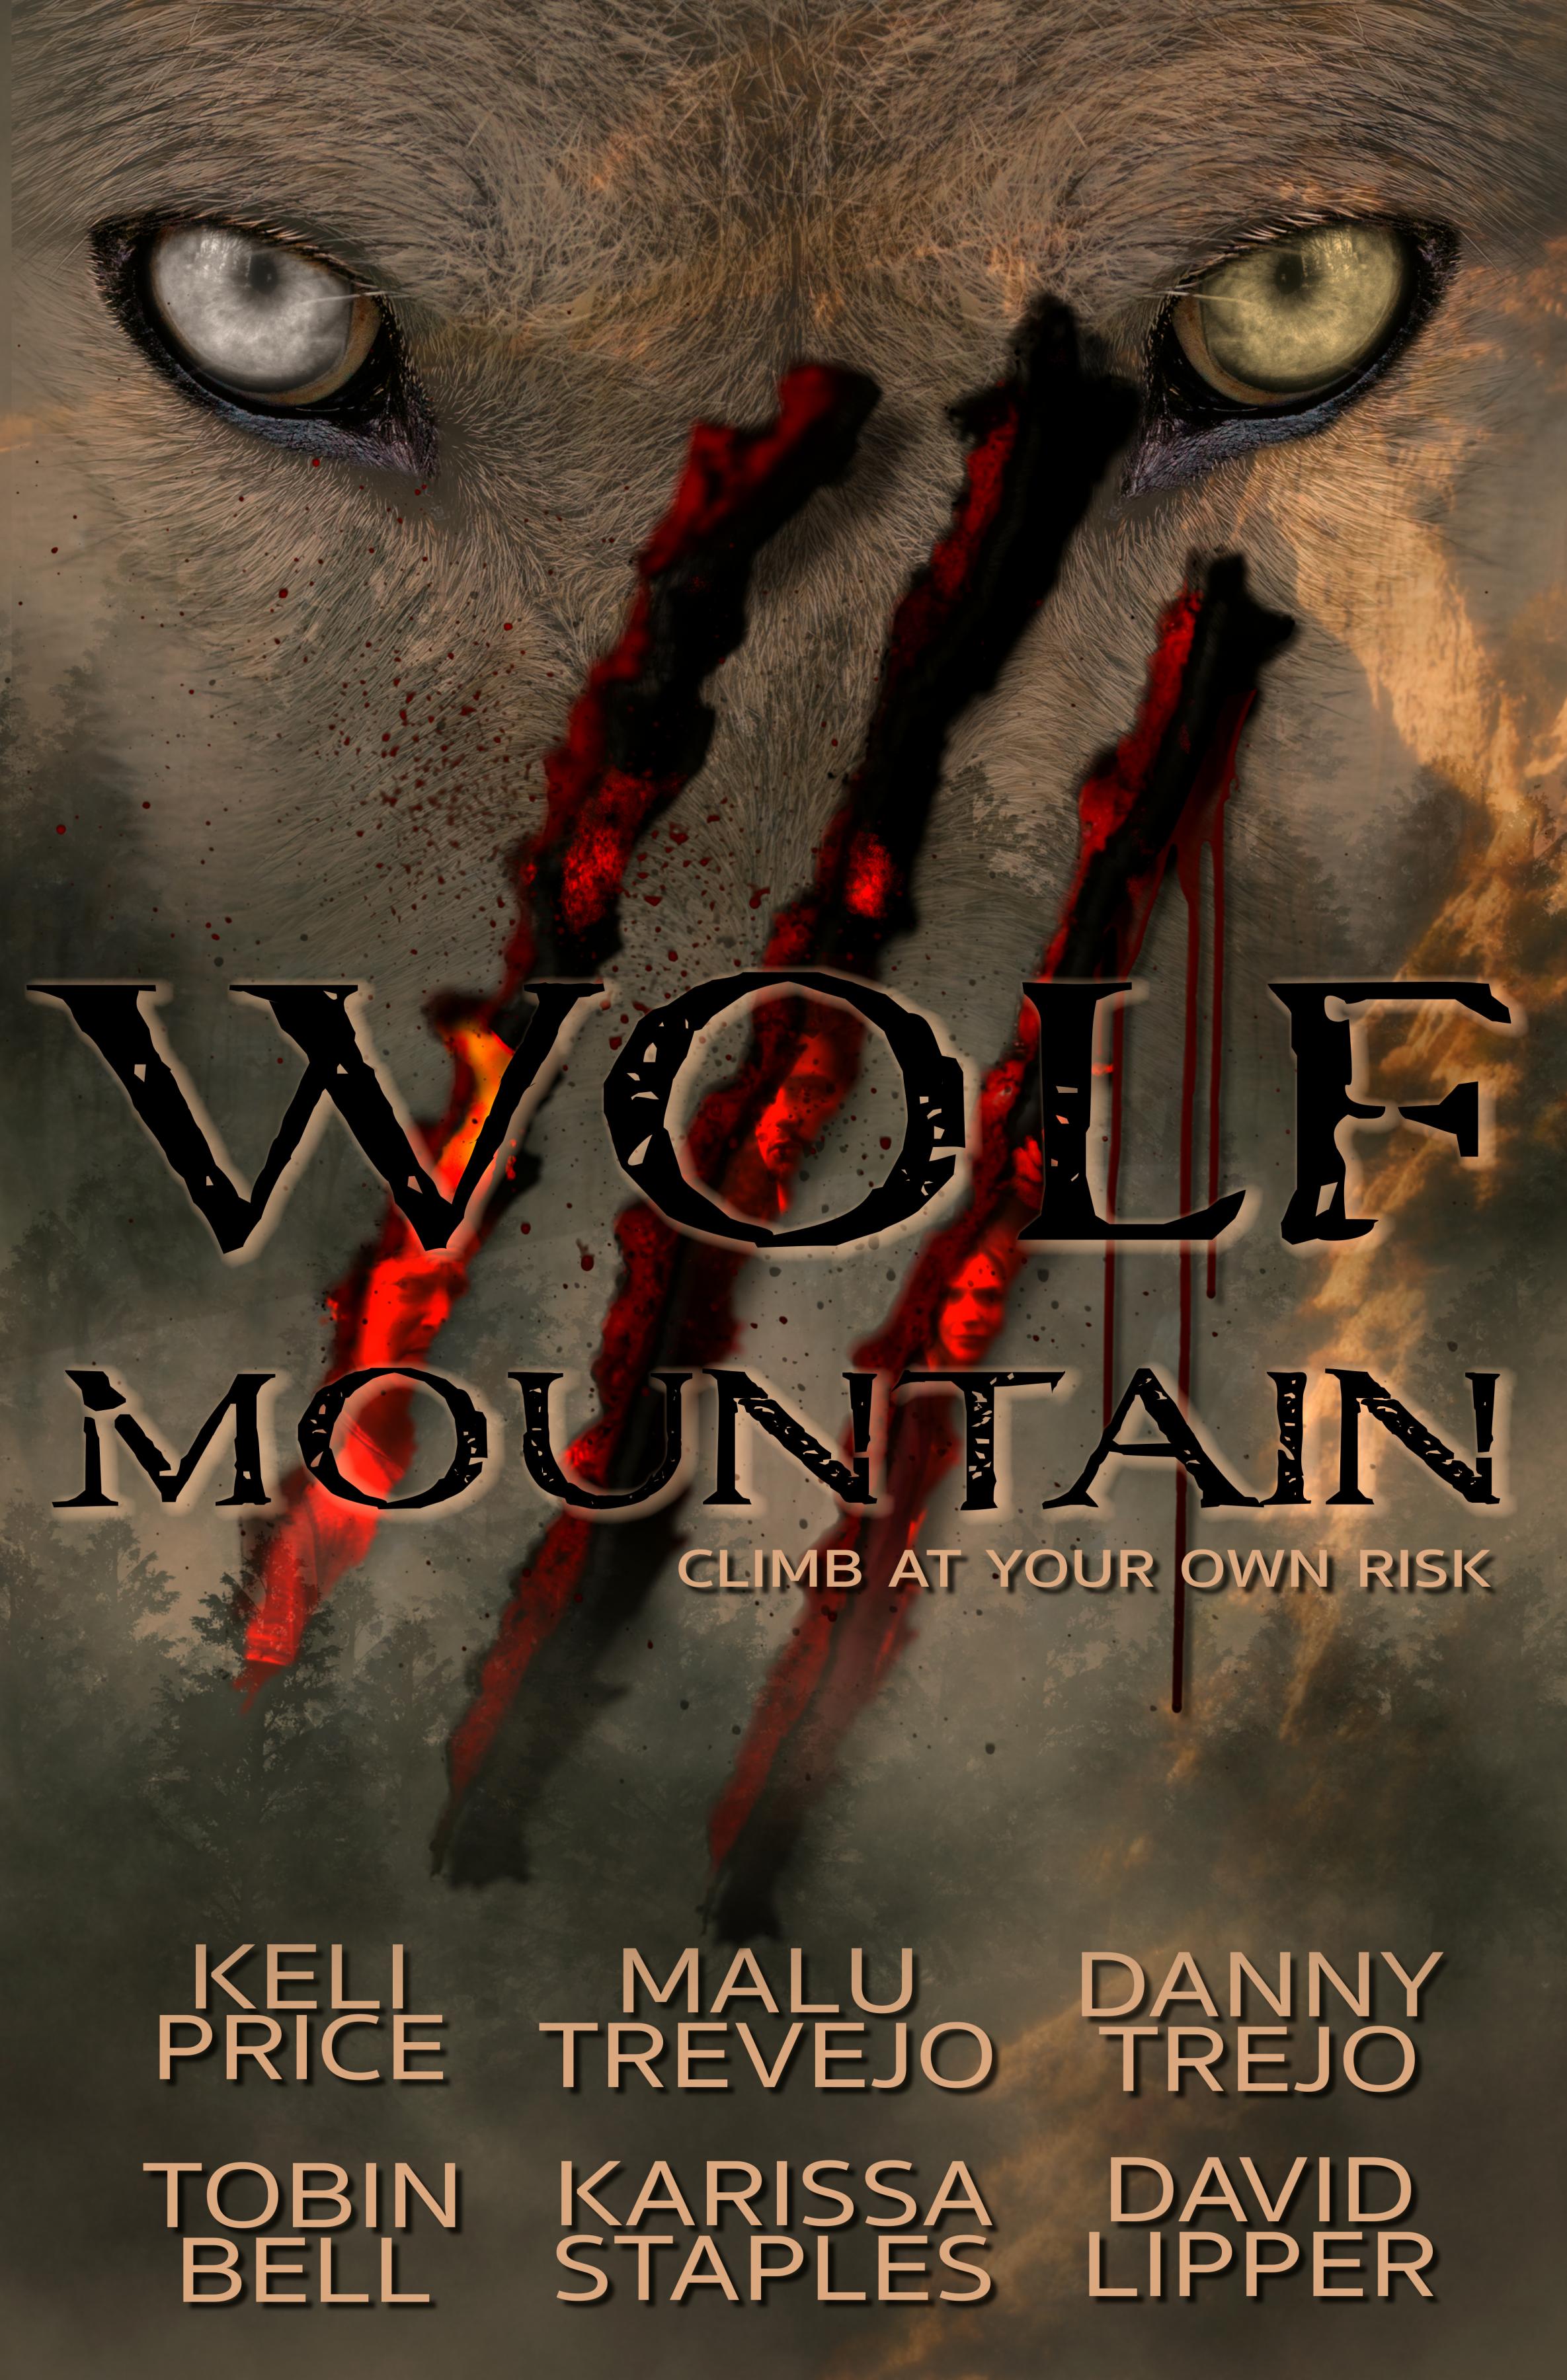 Постер фильма Волчья гора | The Curse of Wolf Mountain